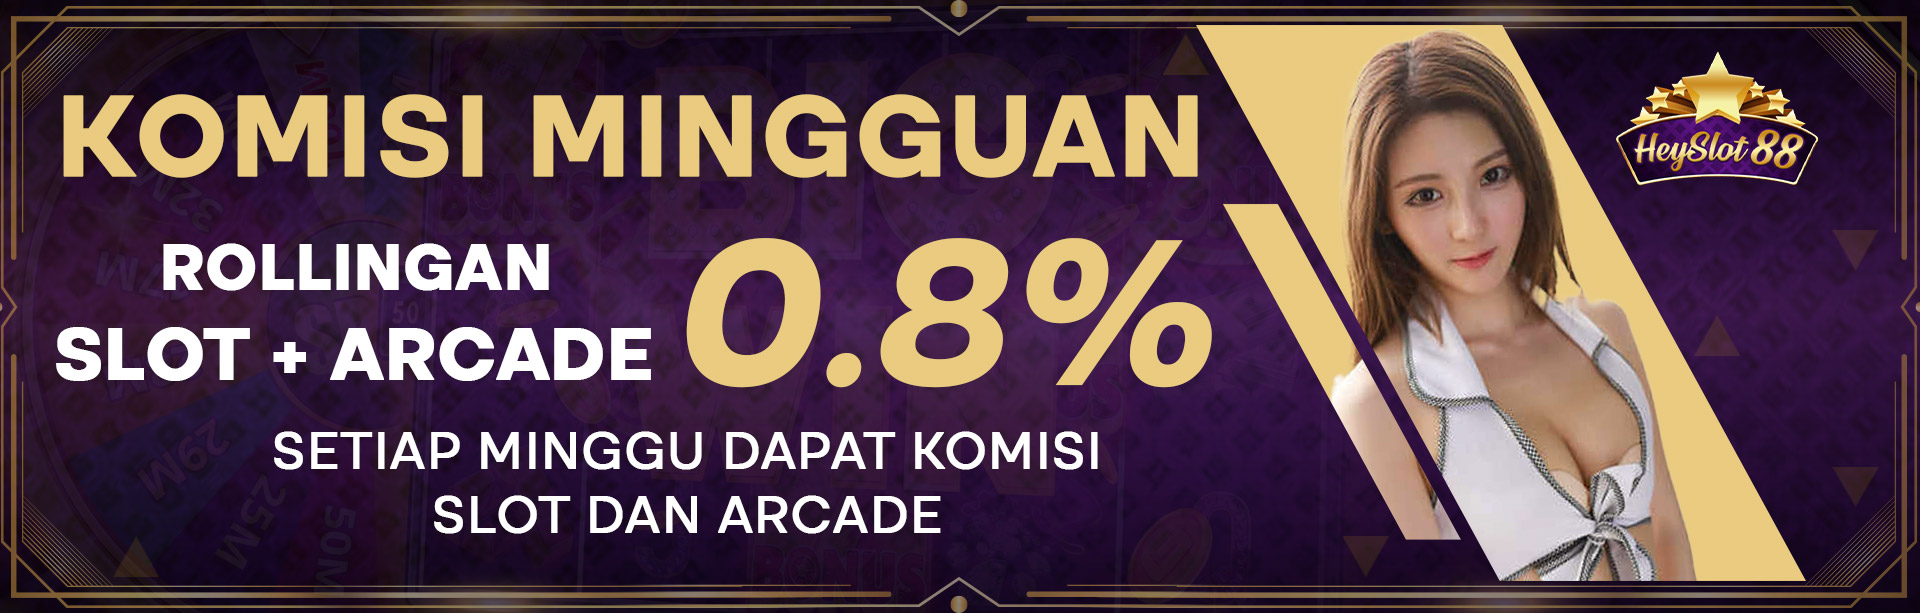 Bonus Komisi Mingguan Slot + Arcade 0.8%